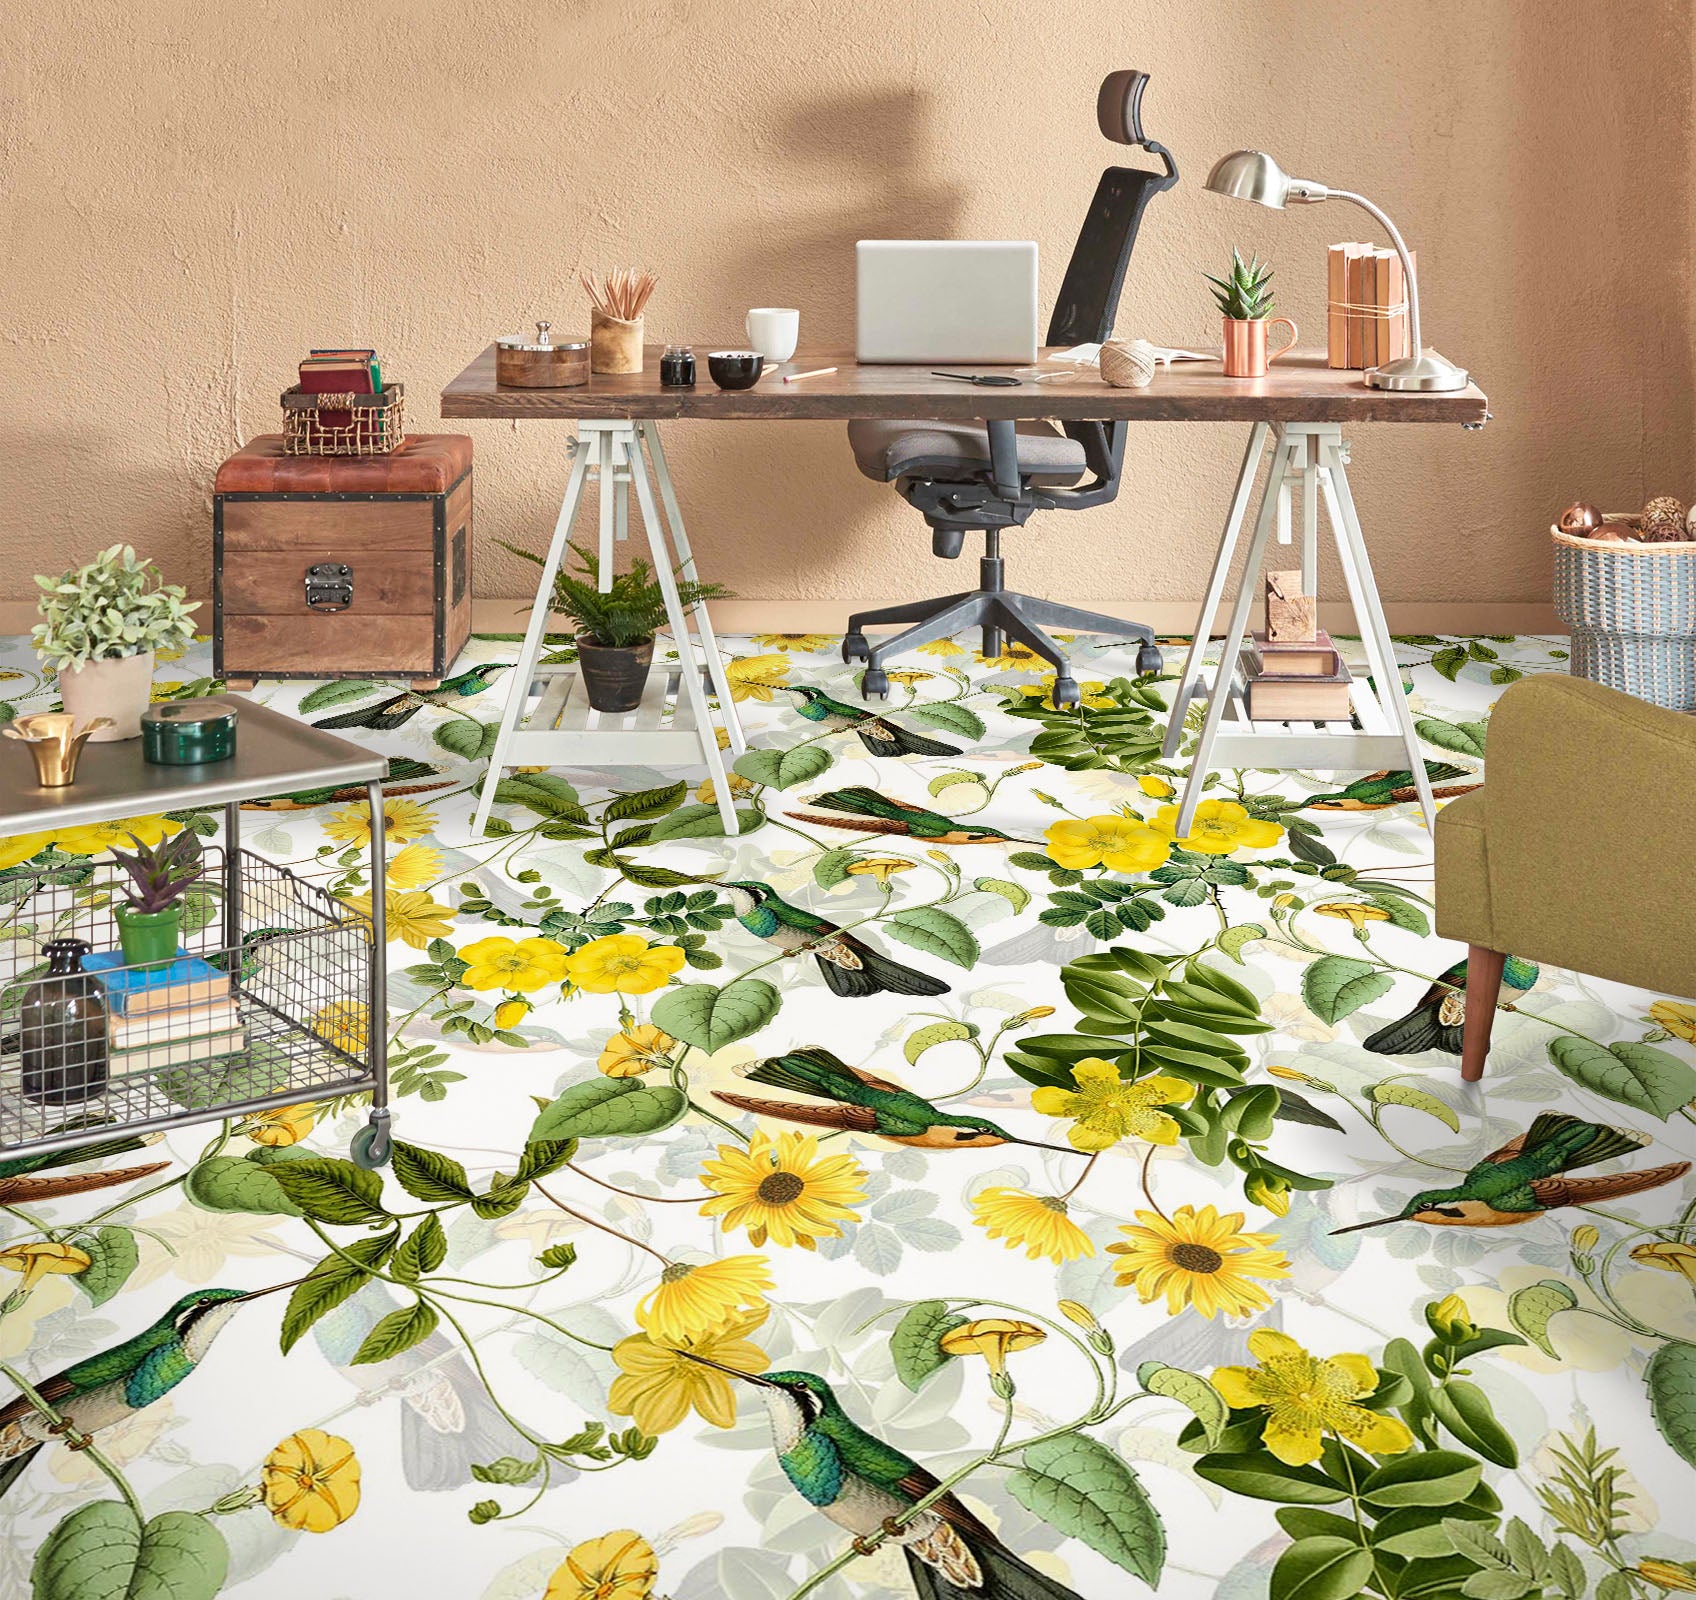 3D Yellow Flowers Daisies 10018 Uta Naumann Floor Mural